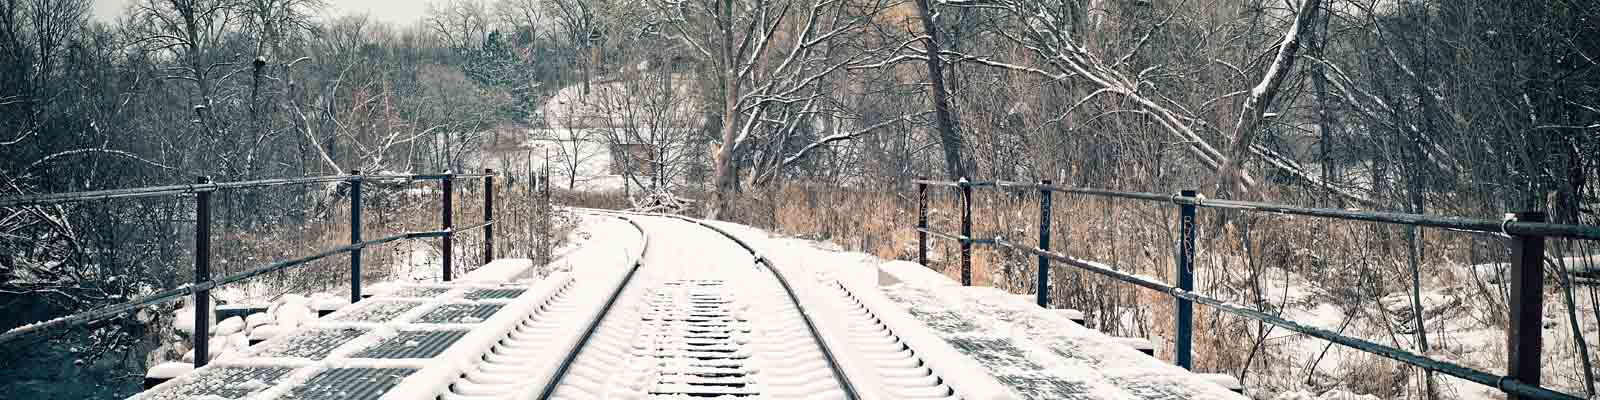 Pictured: Railroad tracks in Minnesota.